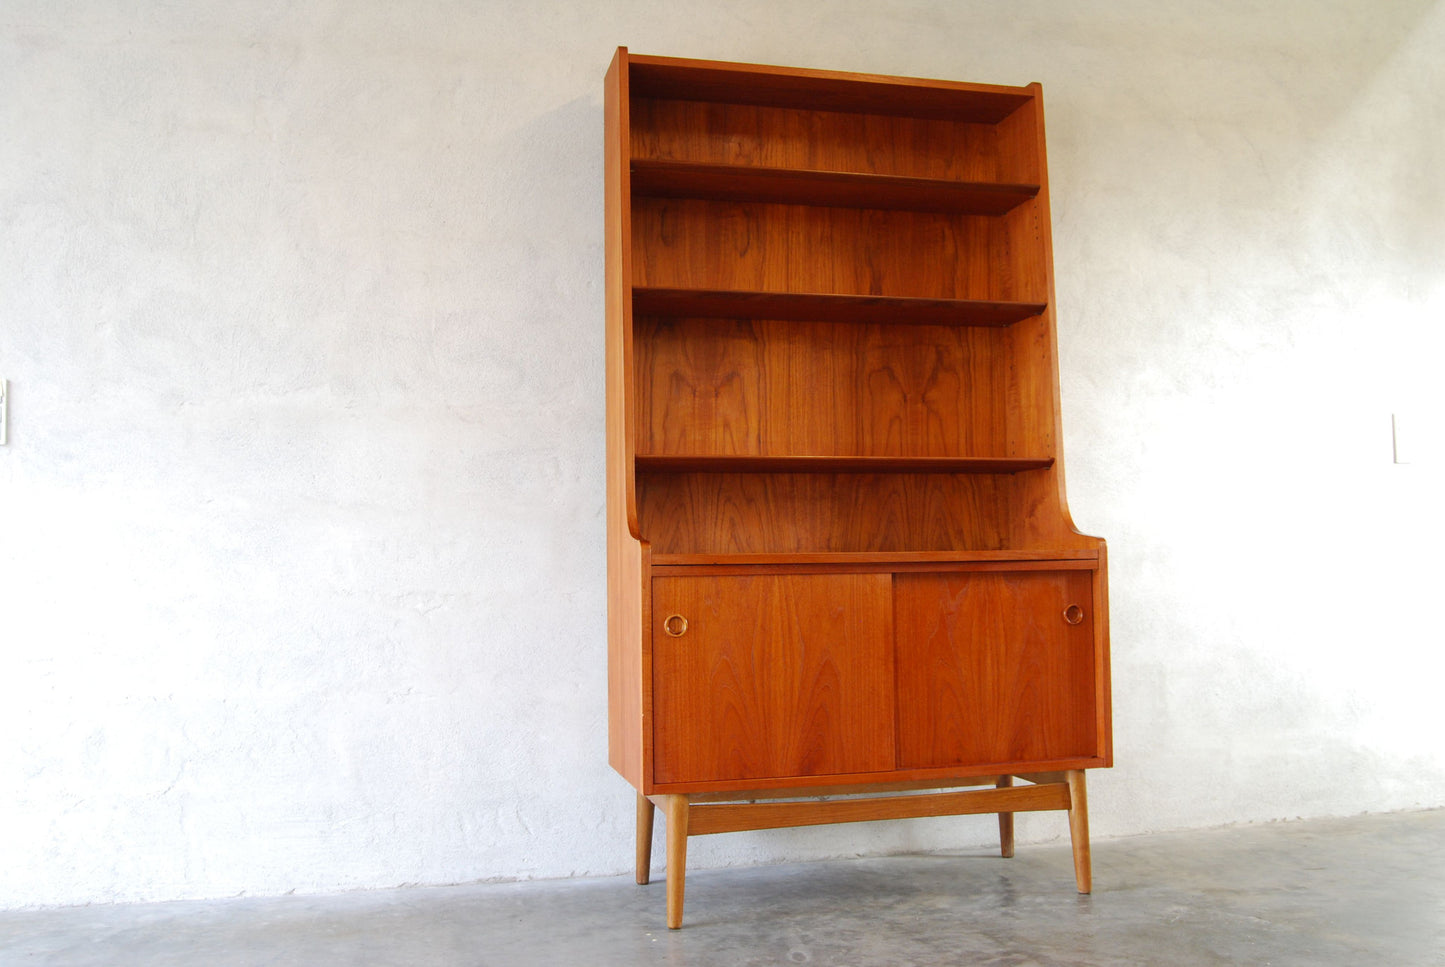 Bookshelf / storage unit